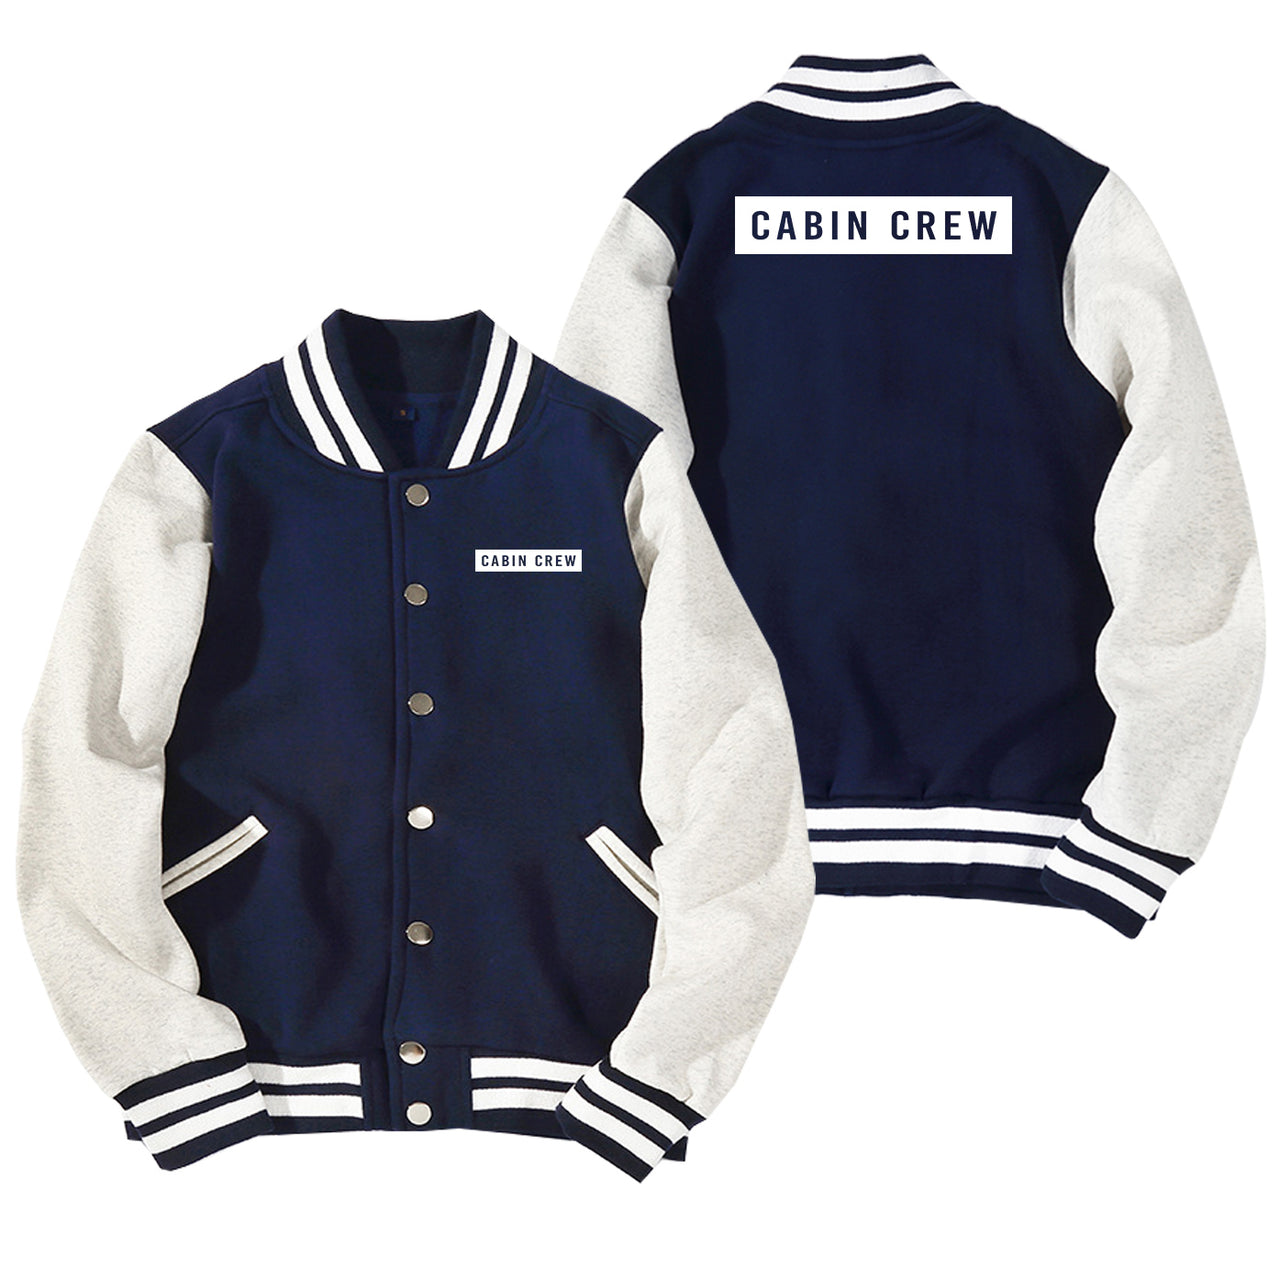 Cabin Crew Text Designed Baseball Style Jackets